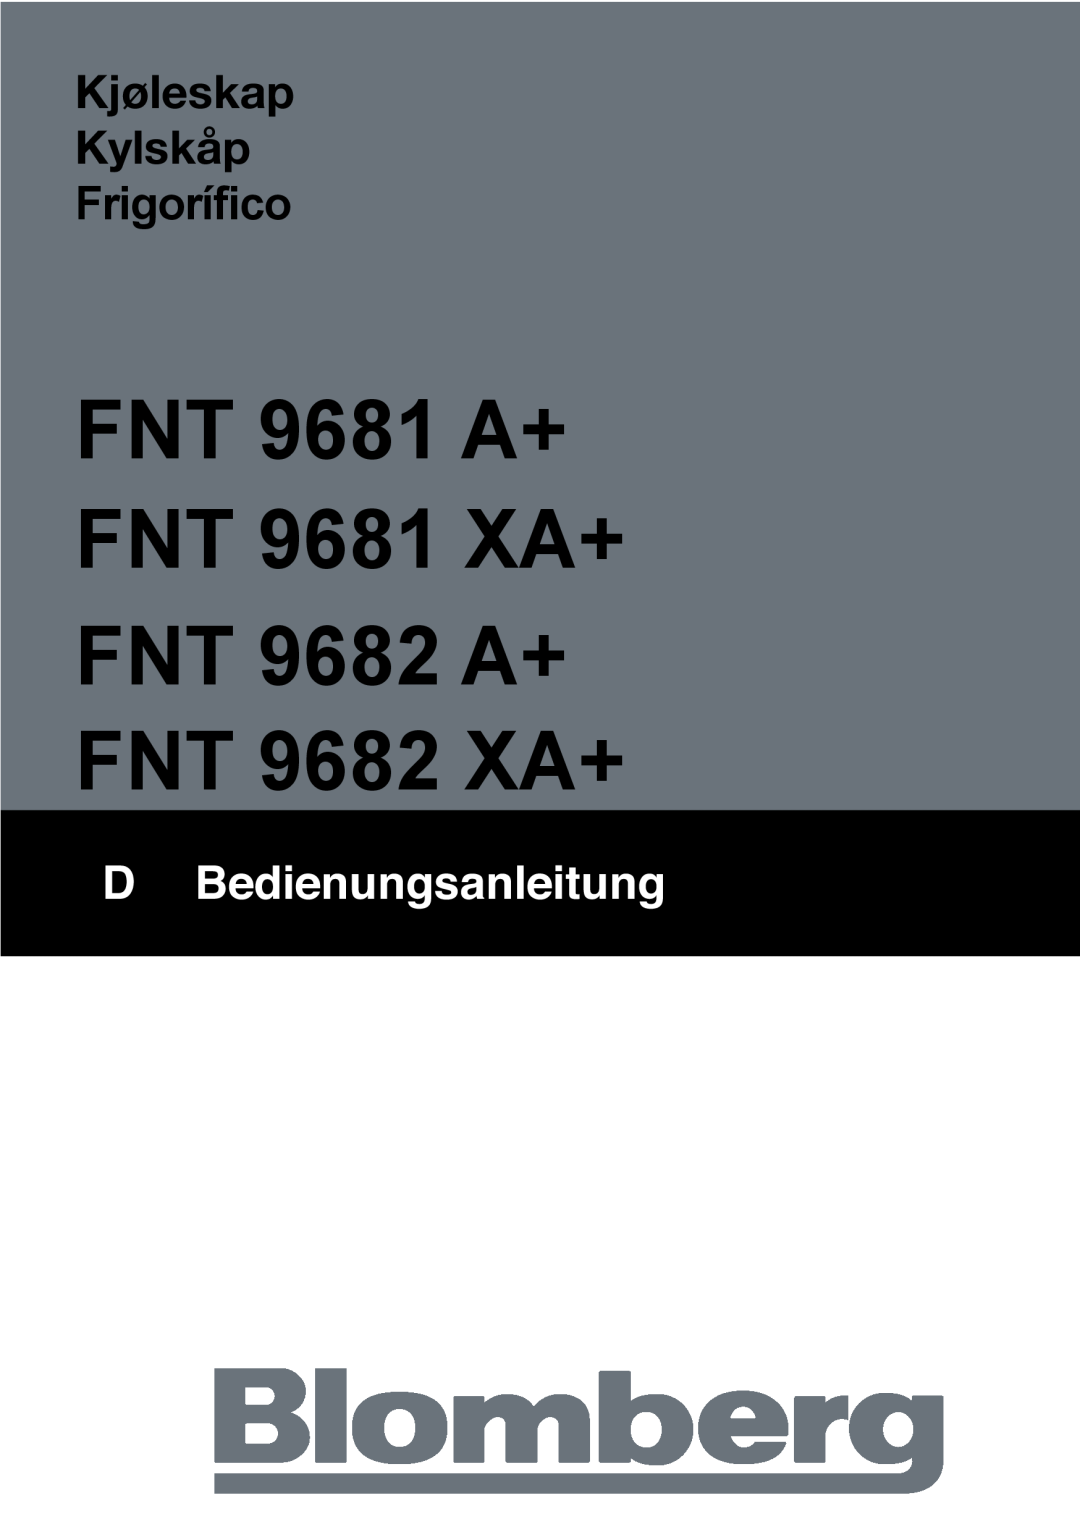 Blomberg manual Kjøleskap Kylskåp Frigorífico, FNT 9681 A+ FNT 9681 XA+ FNT 9682 A+ FNT 9682 XA+, D Bedienungsanleitung 